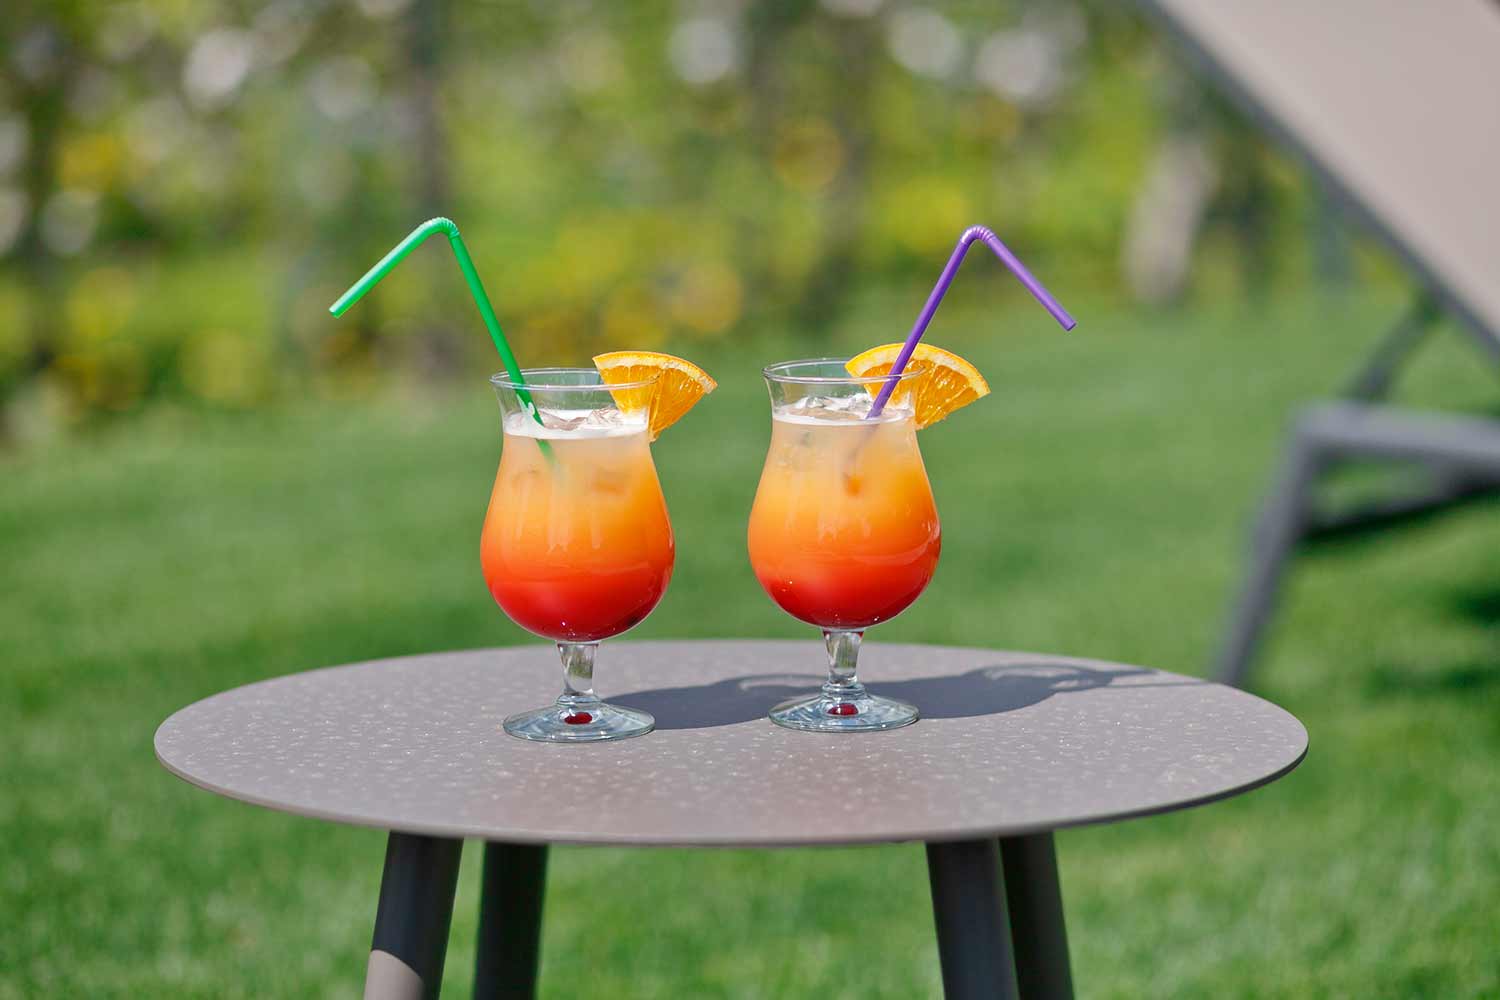 Enjoy a fresh cocktail in the garden